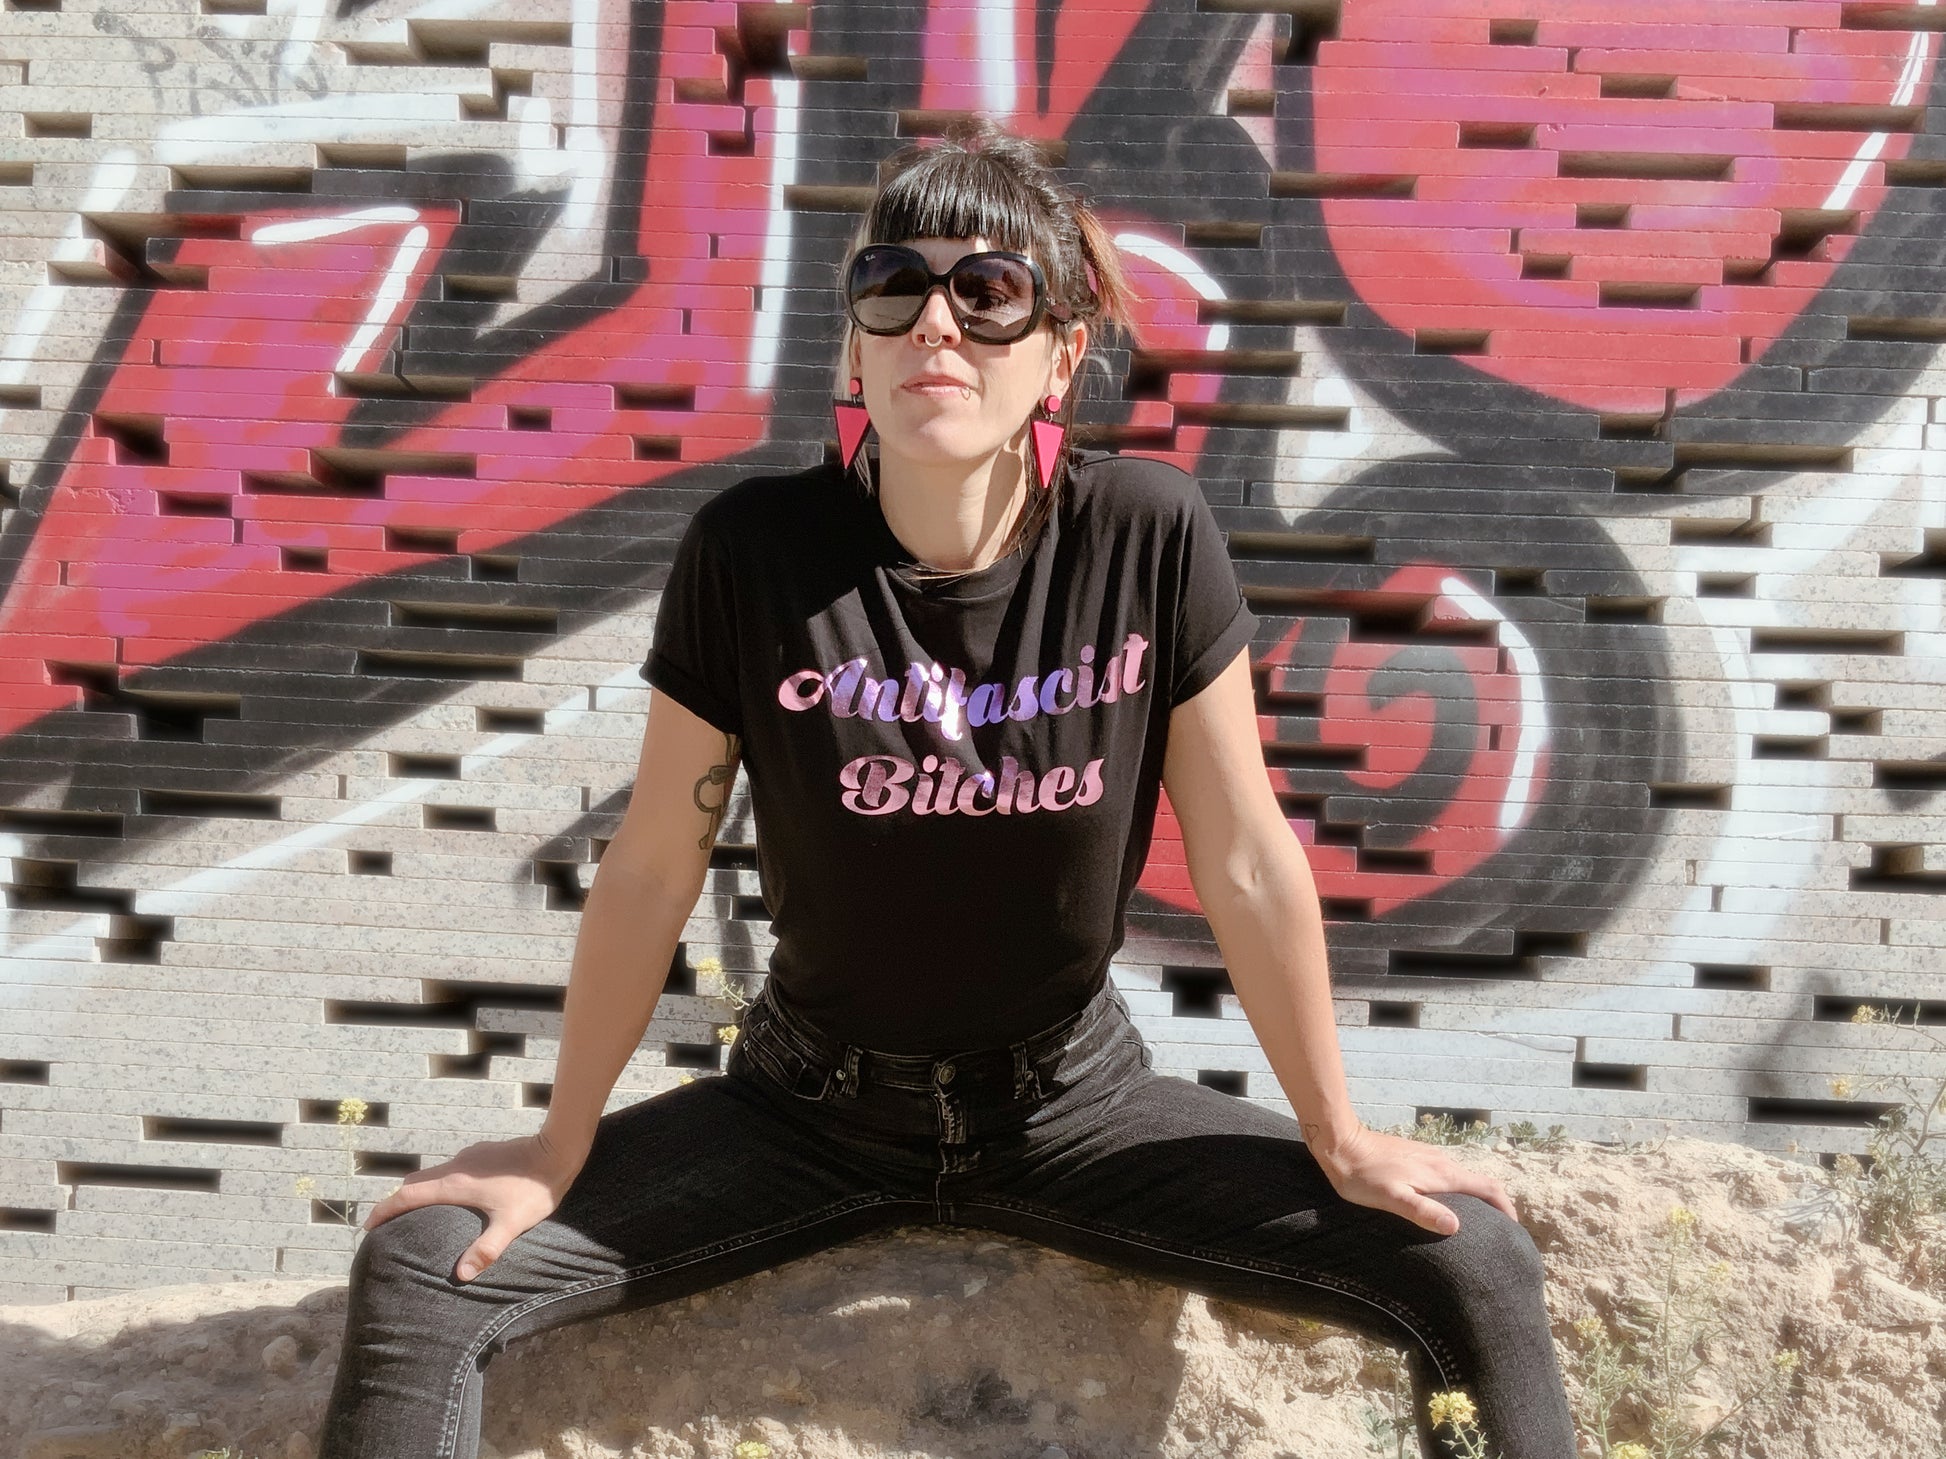 camiseta negra algodón ecológica antifascistas ropa feminista brillo rosa putas antifascistas zorras antifascistas antifascismo antifa